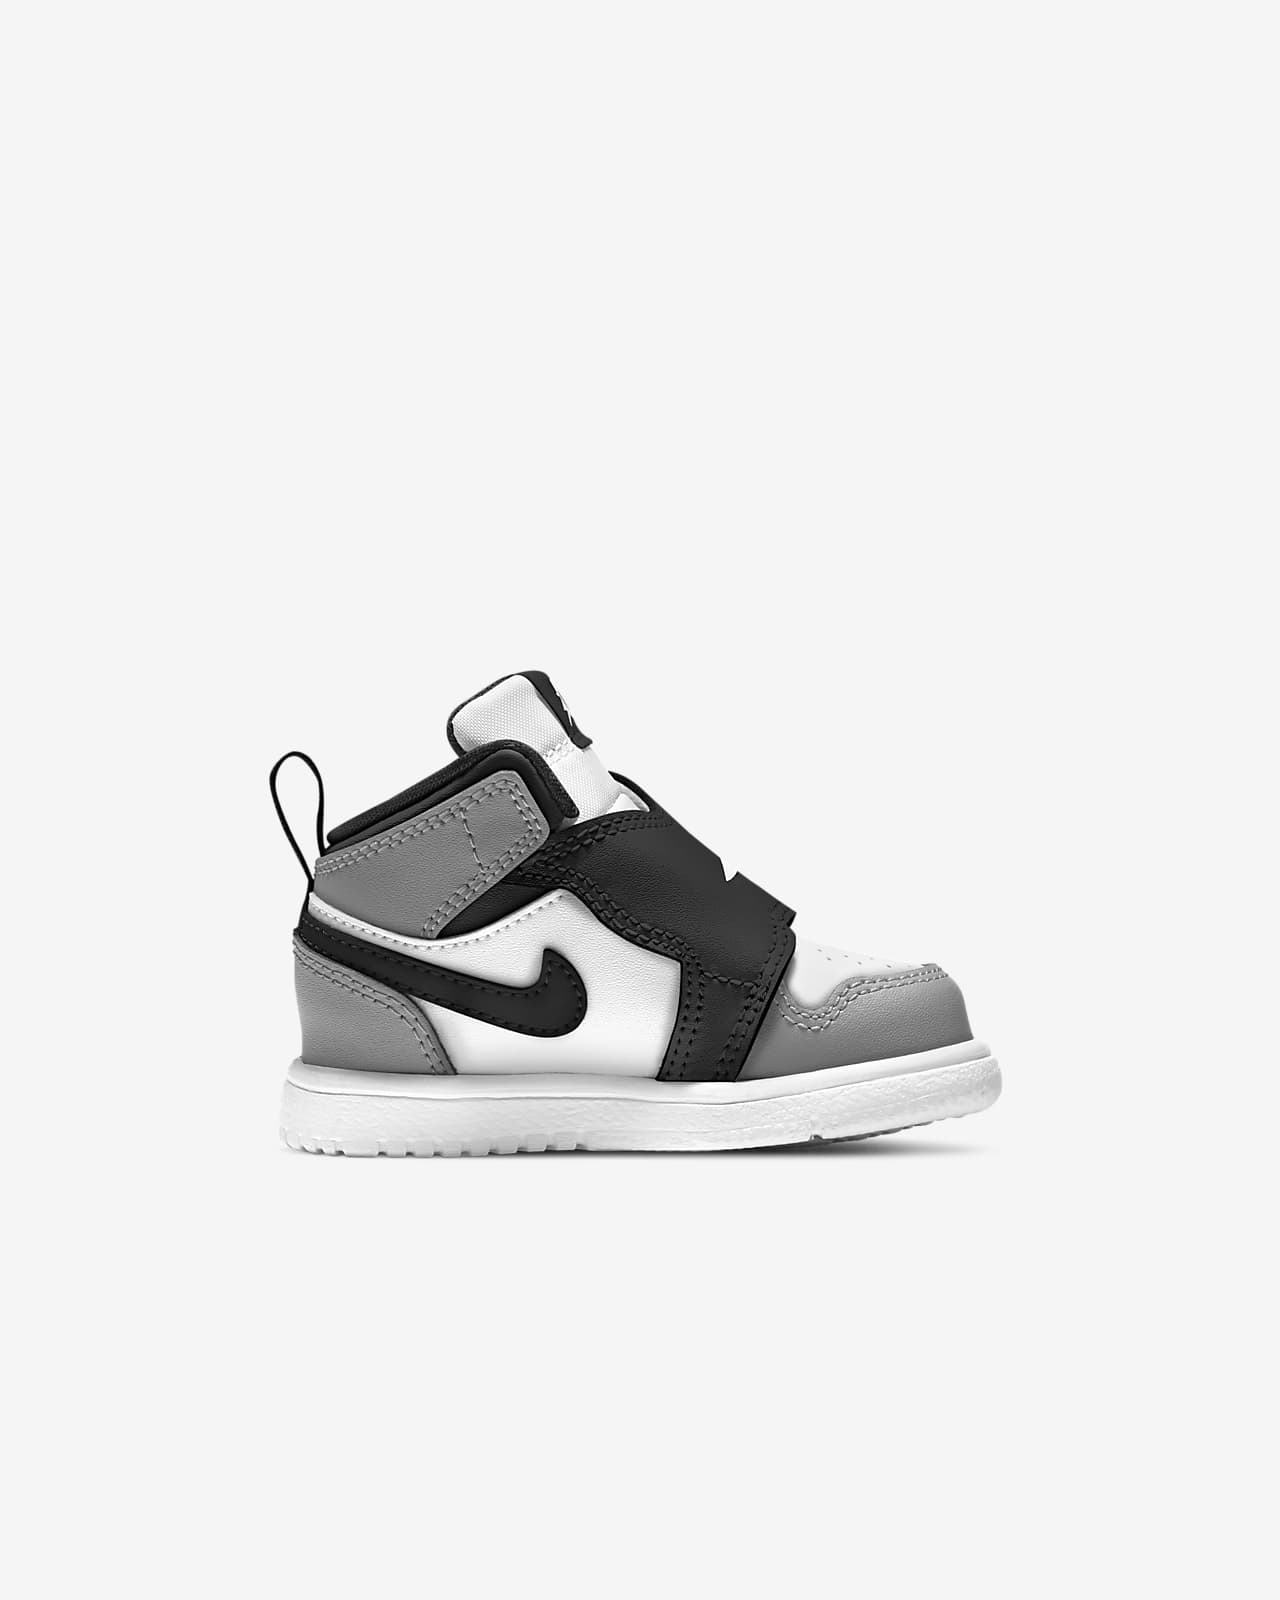 Sky Jordan 1 Baby and Toddler Shoe. Nike SG